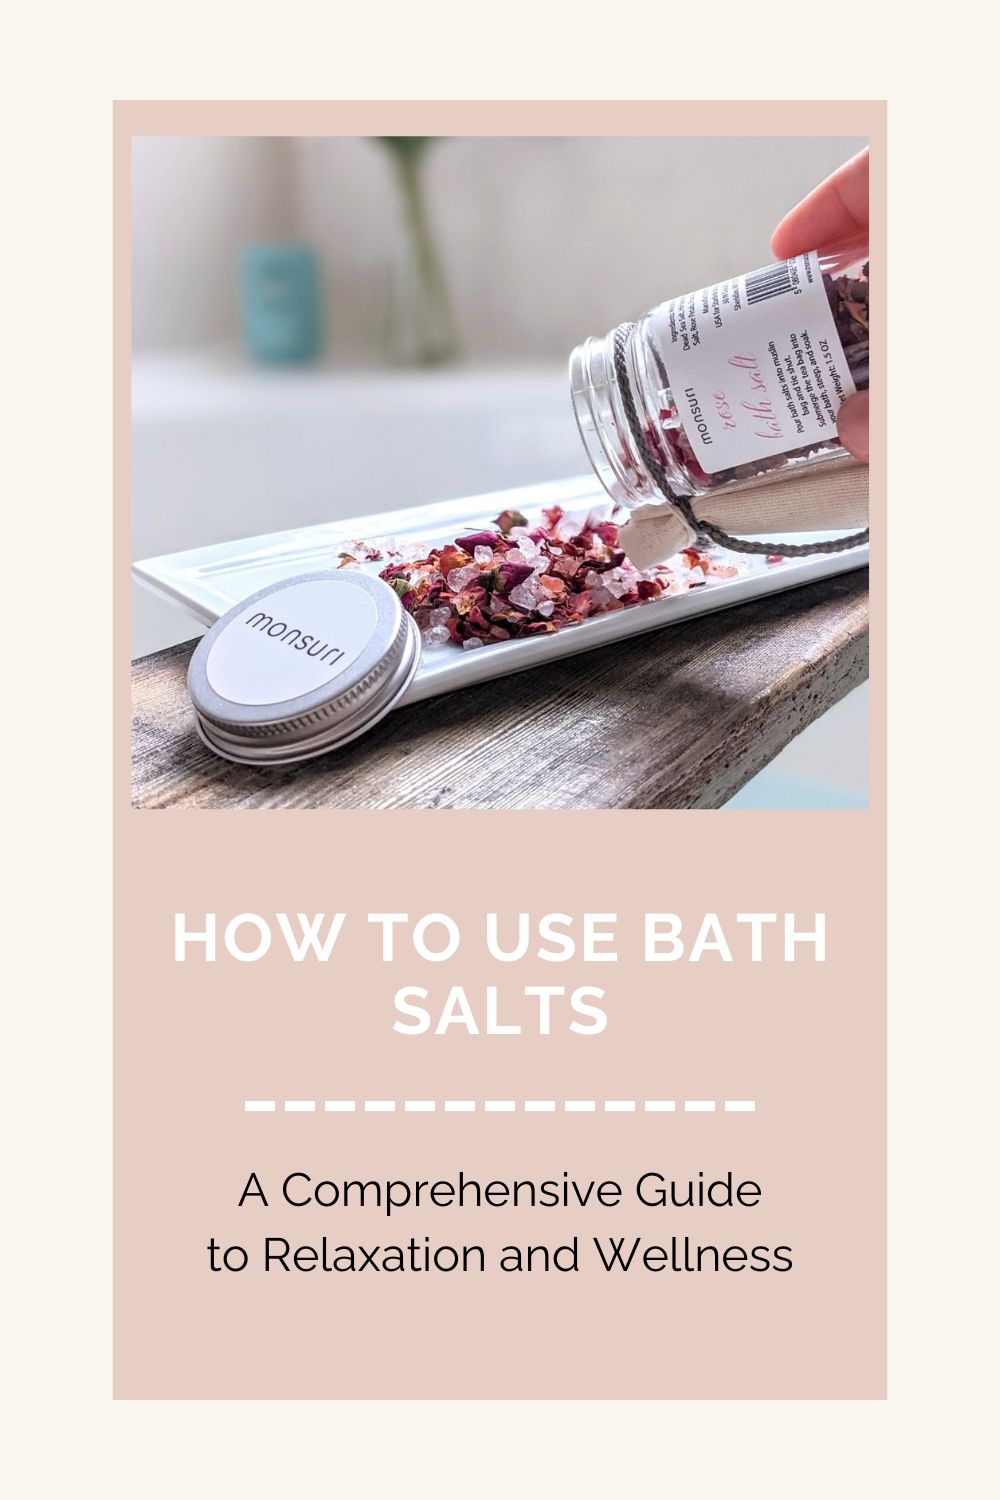 How to use bath salts